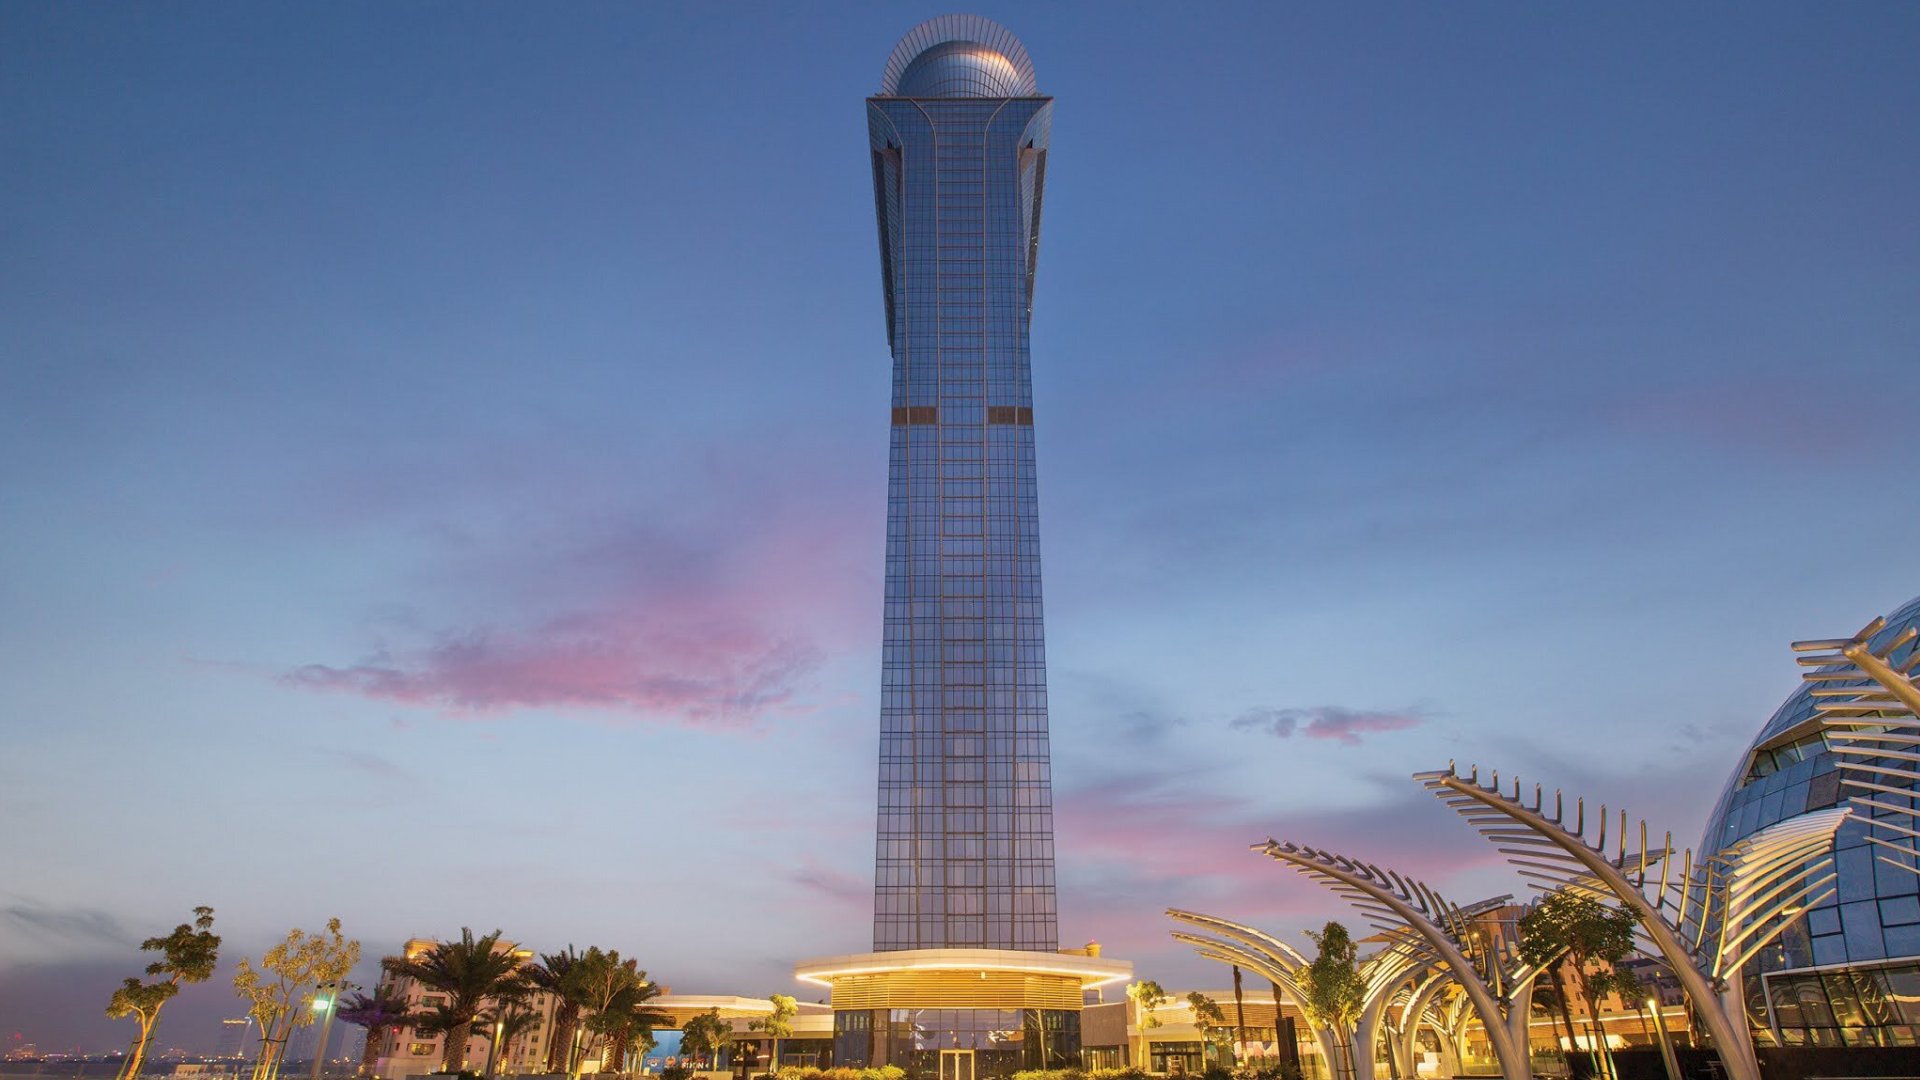 THE PALM TOWER by Nakheel Properties on Palm Jumeirah, Dubai